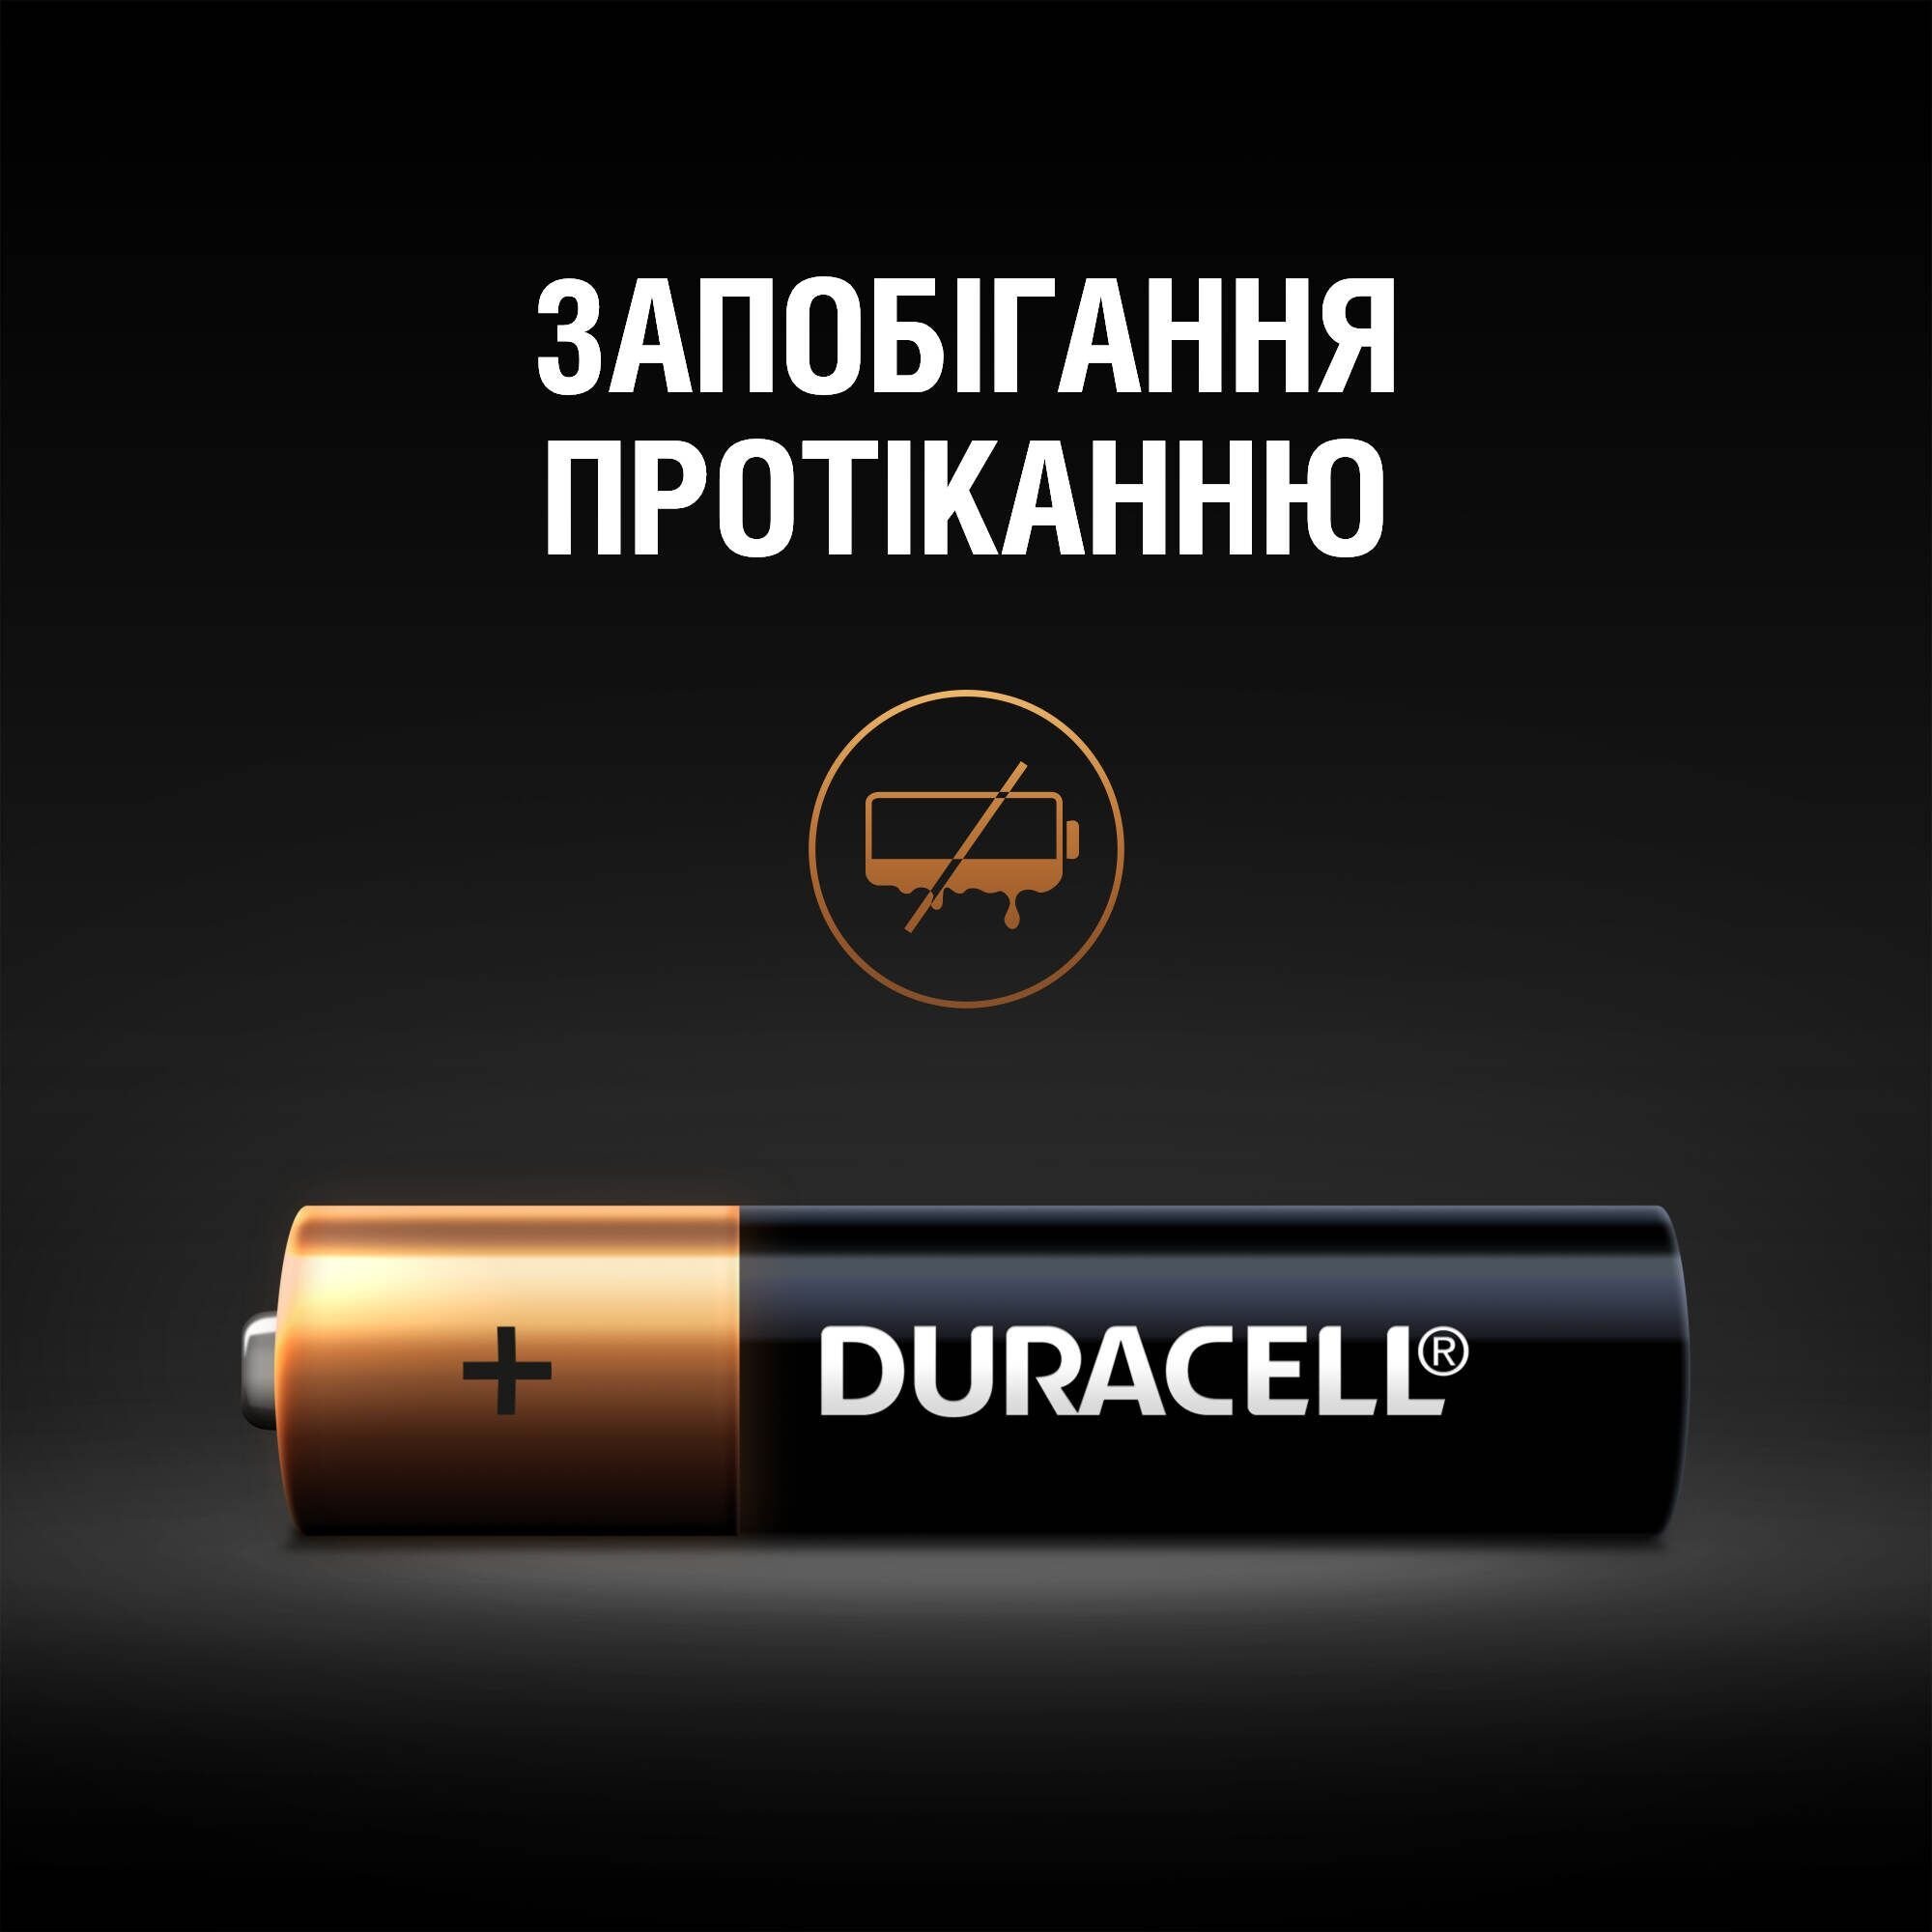 Щелочные батарейки мизинчиковые Duracell 1.5 V AAA LR03/MN2400, 4 шт. (706006) - фото 4